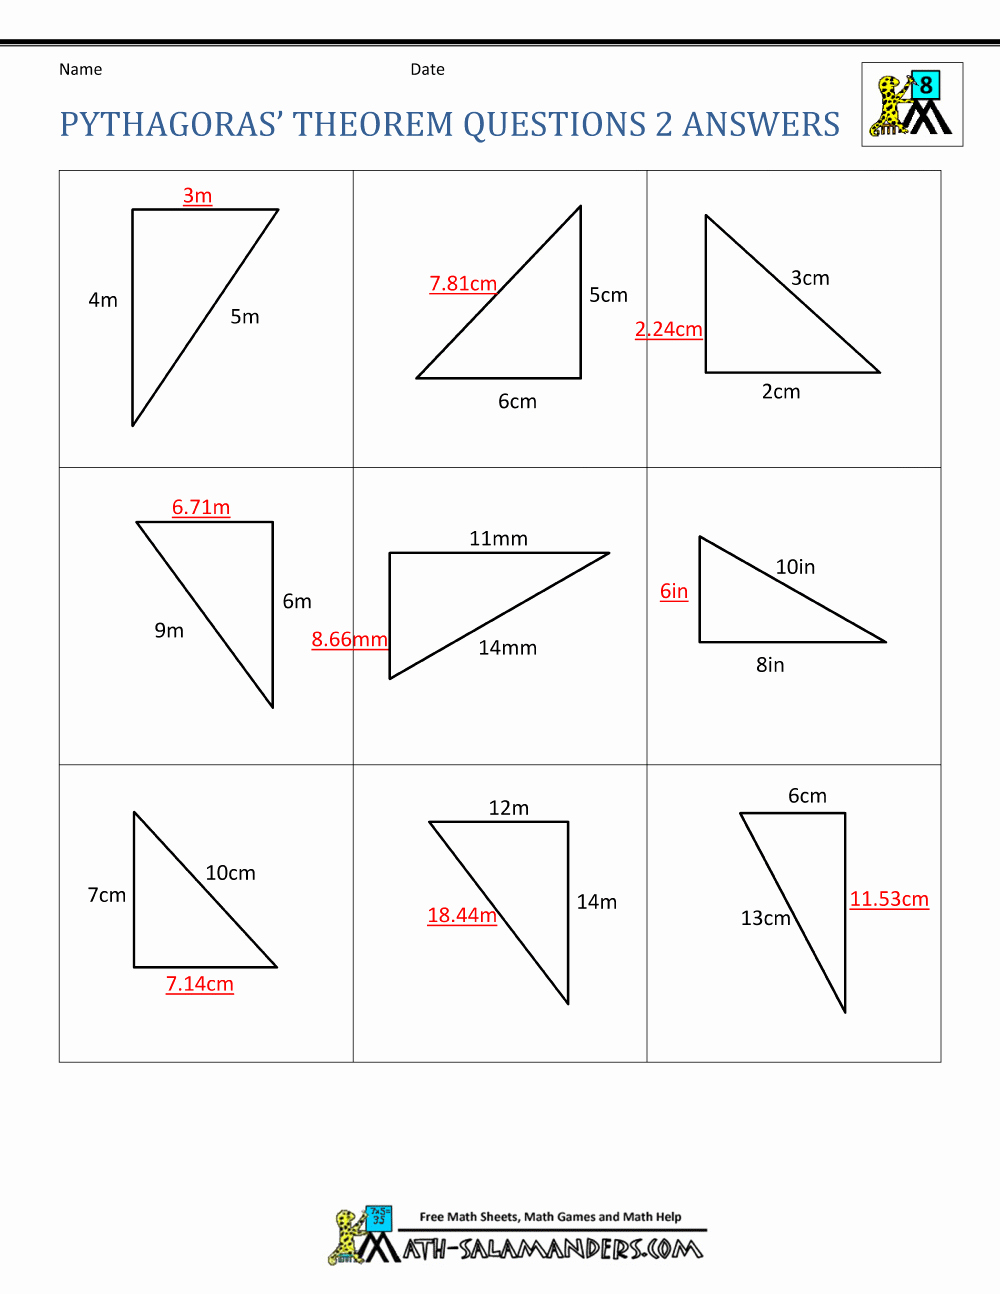 Pythagorean theorem Worksheet Answer Key Luxury Pythagoras theorem Questions